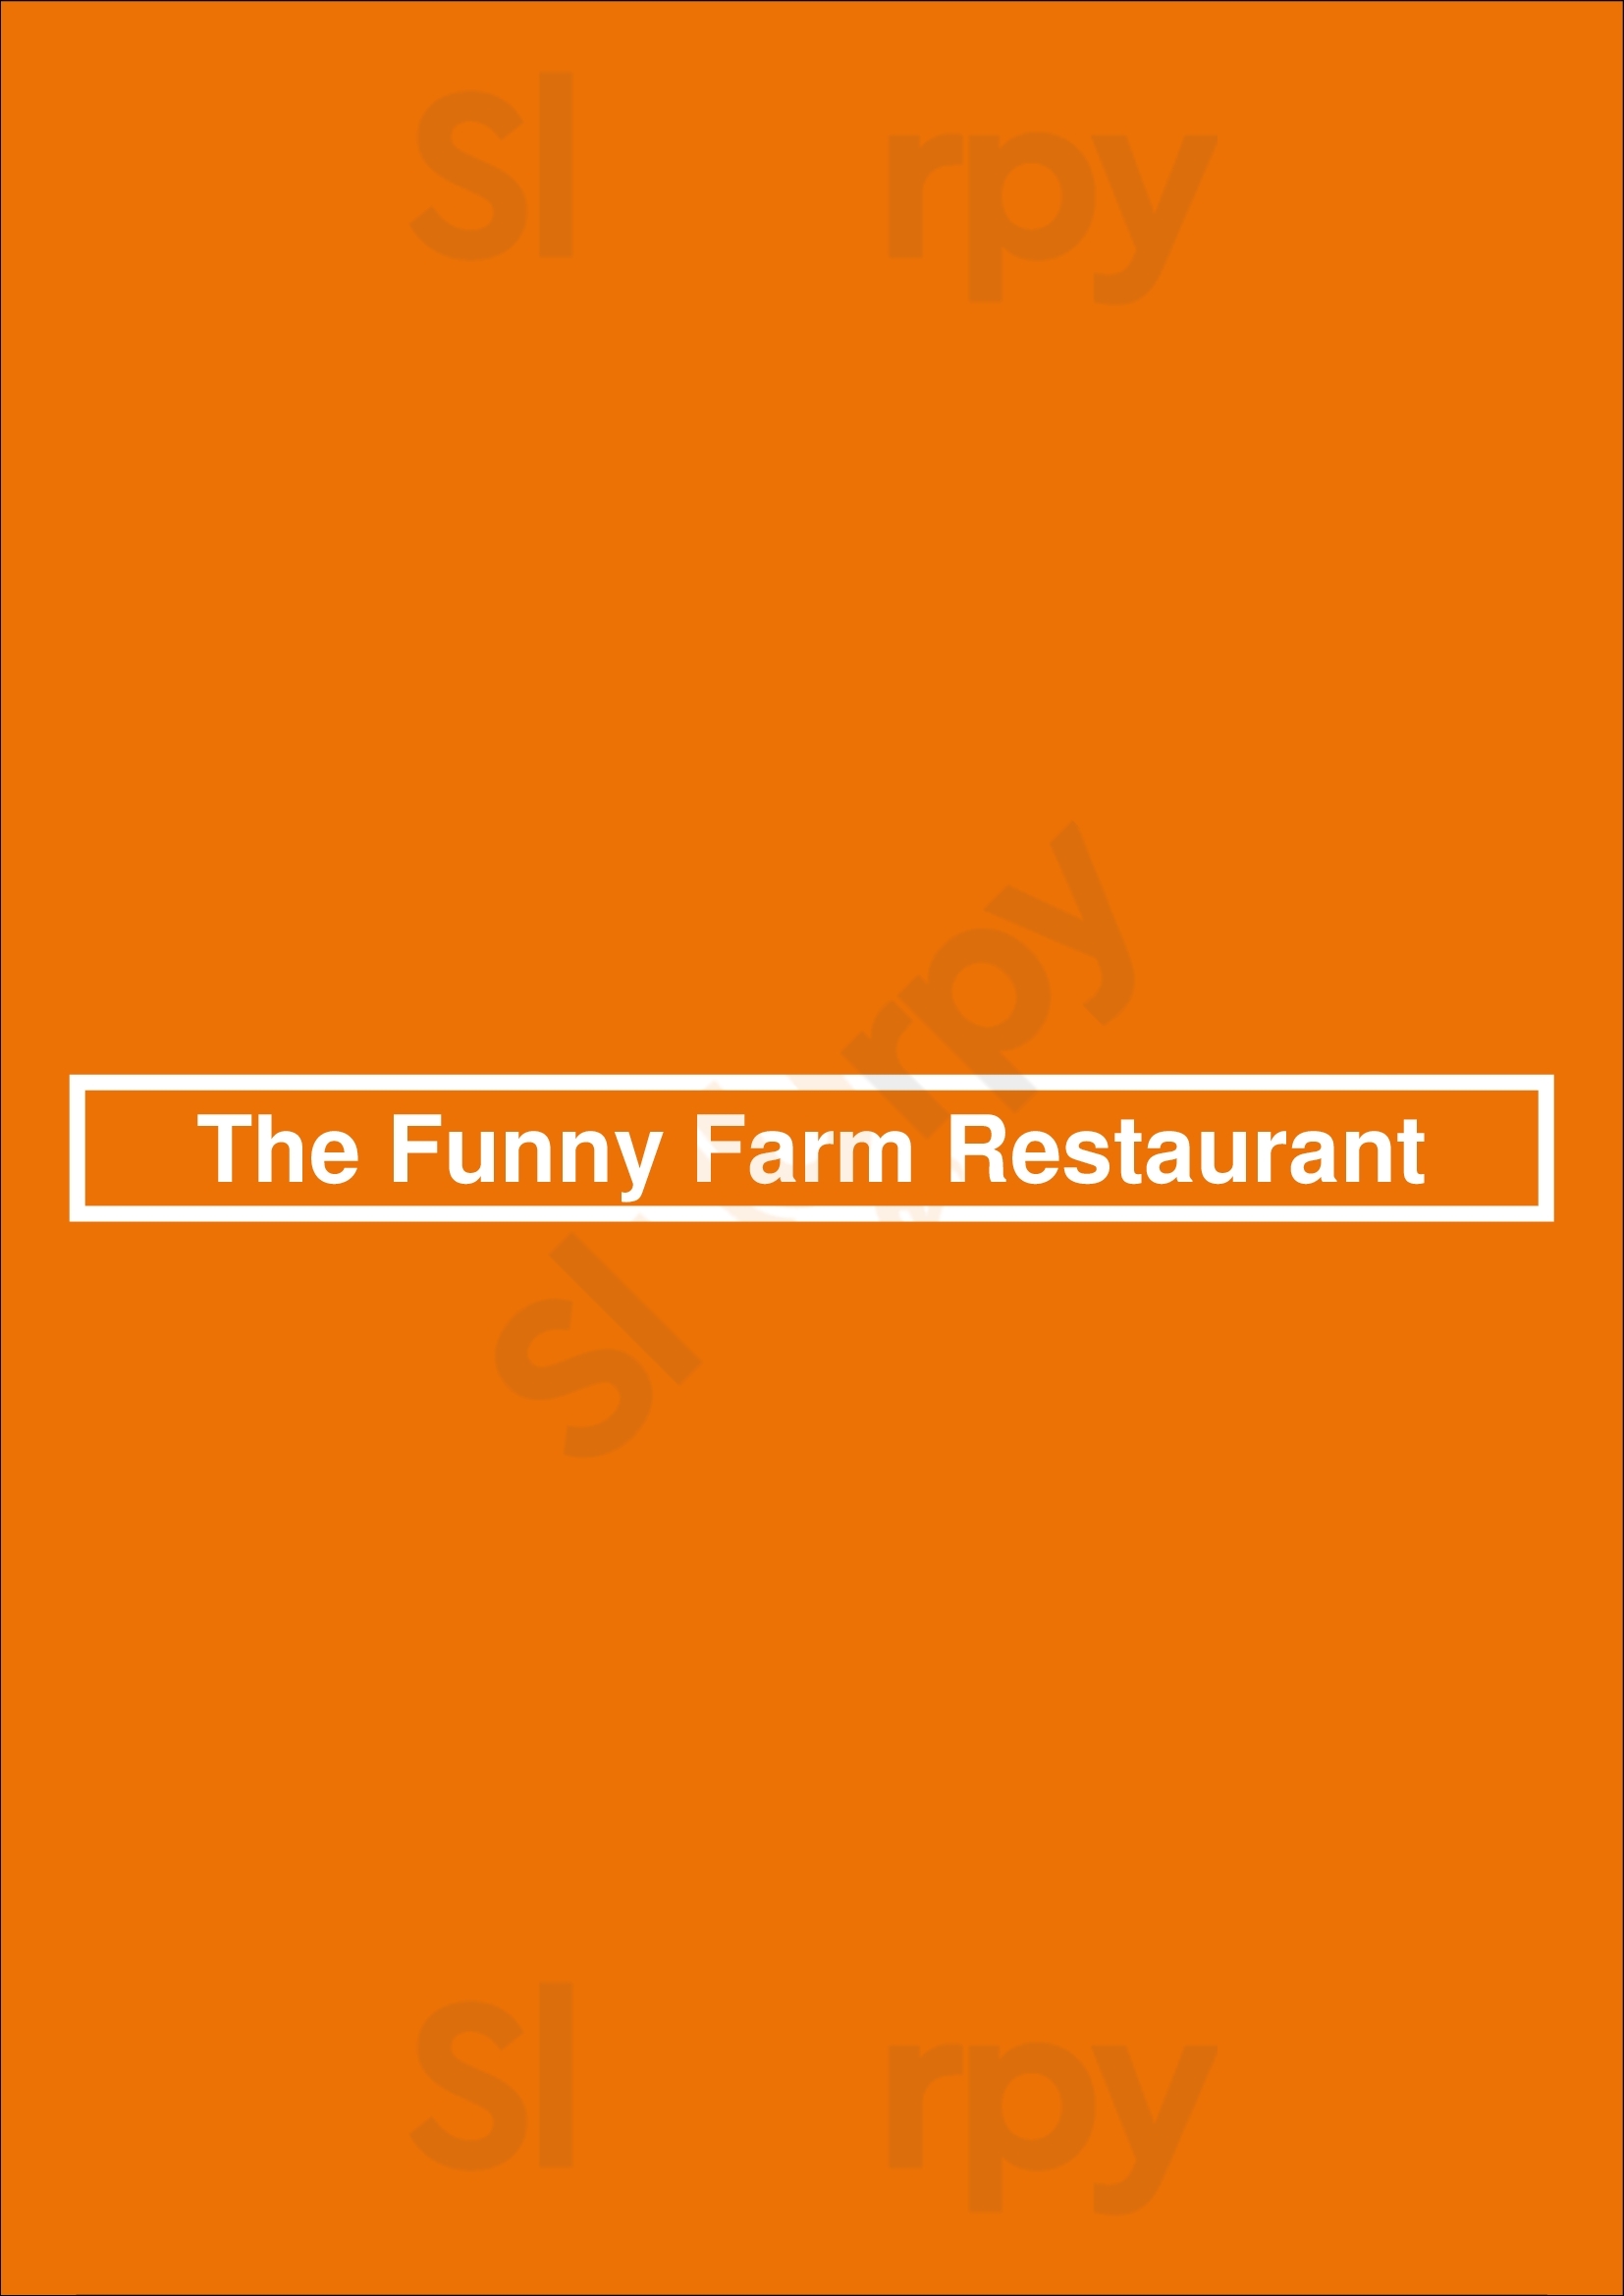 The Funny Farm Restaurant San Jose Menu - 1